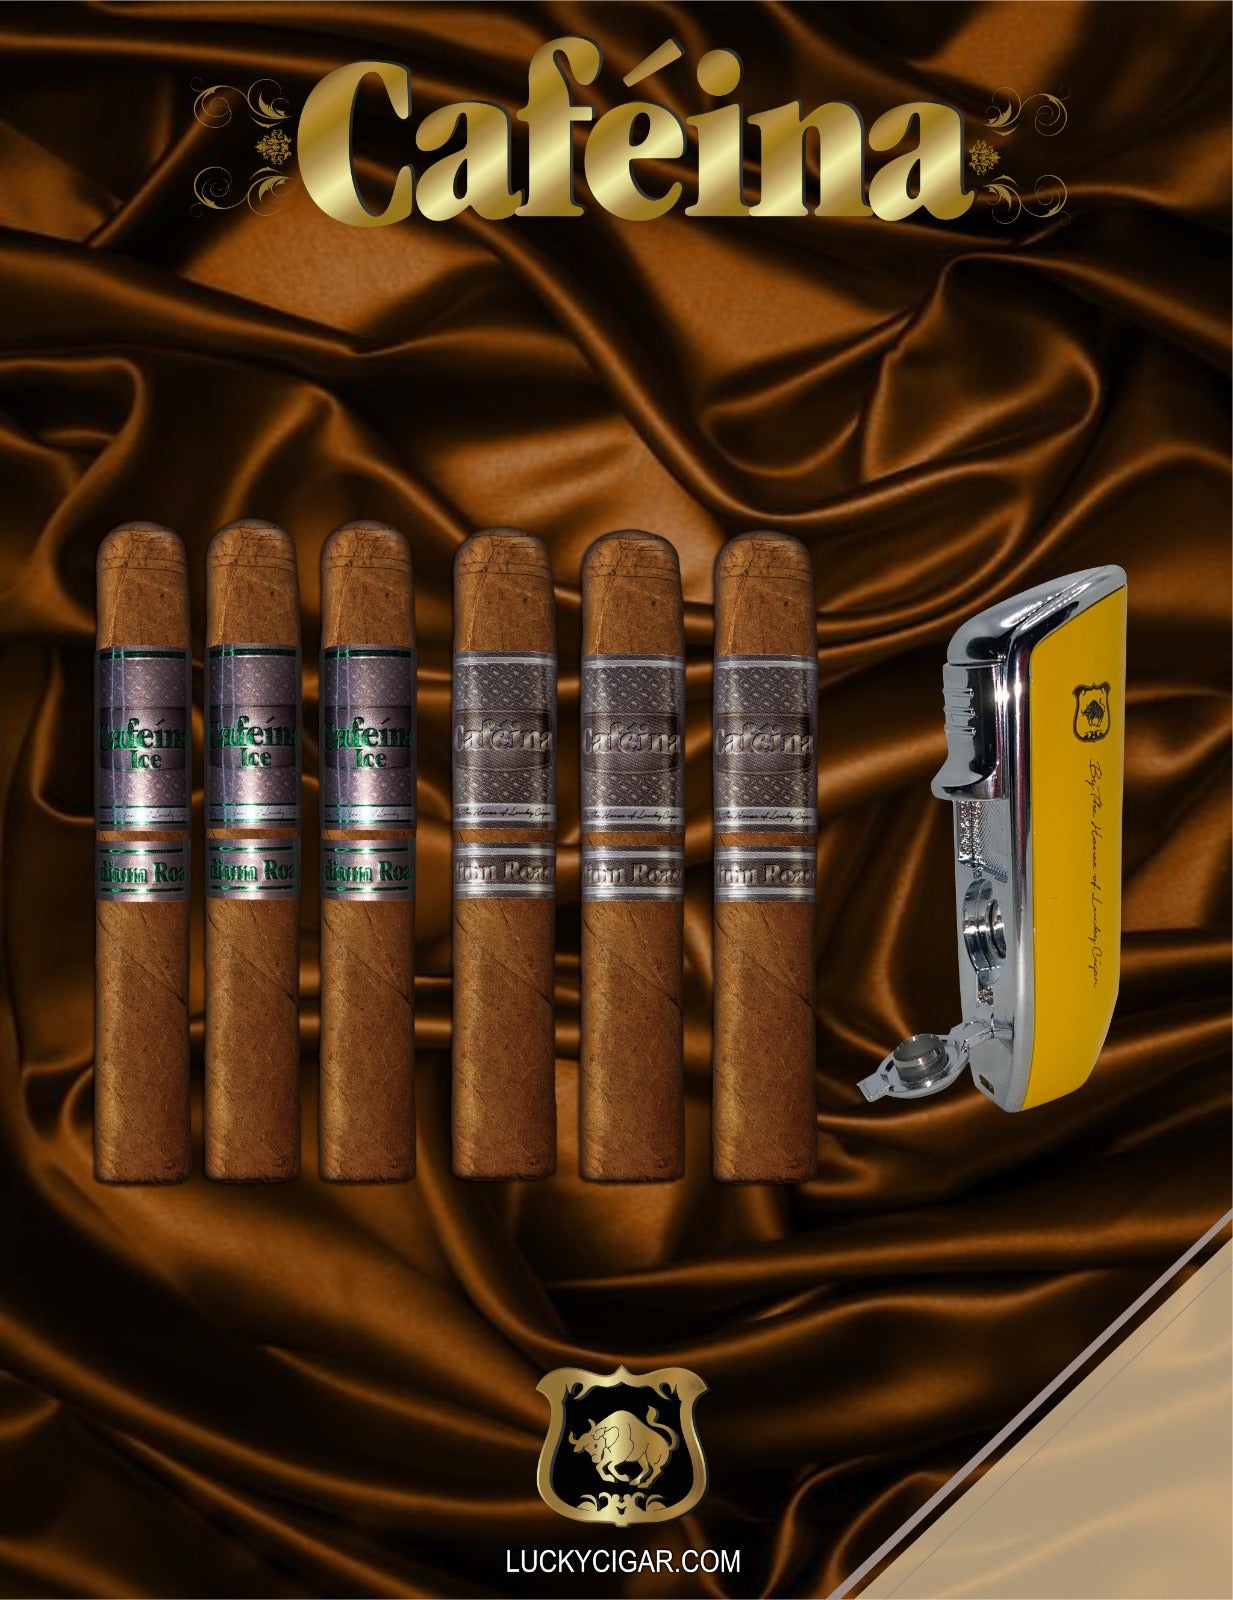 Infused Cigars: Set of 6 Cafeina Roast Cigars - 3 Medium 6x52, 3 Medium Ice 6x52 Cigars with Torch